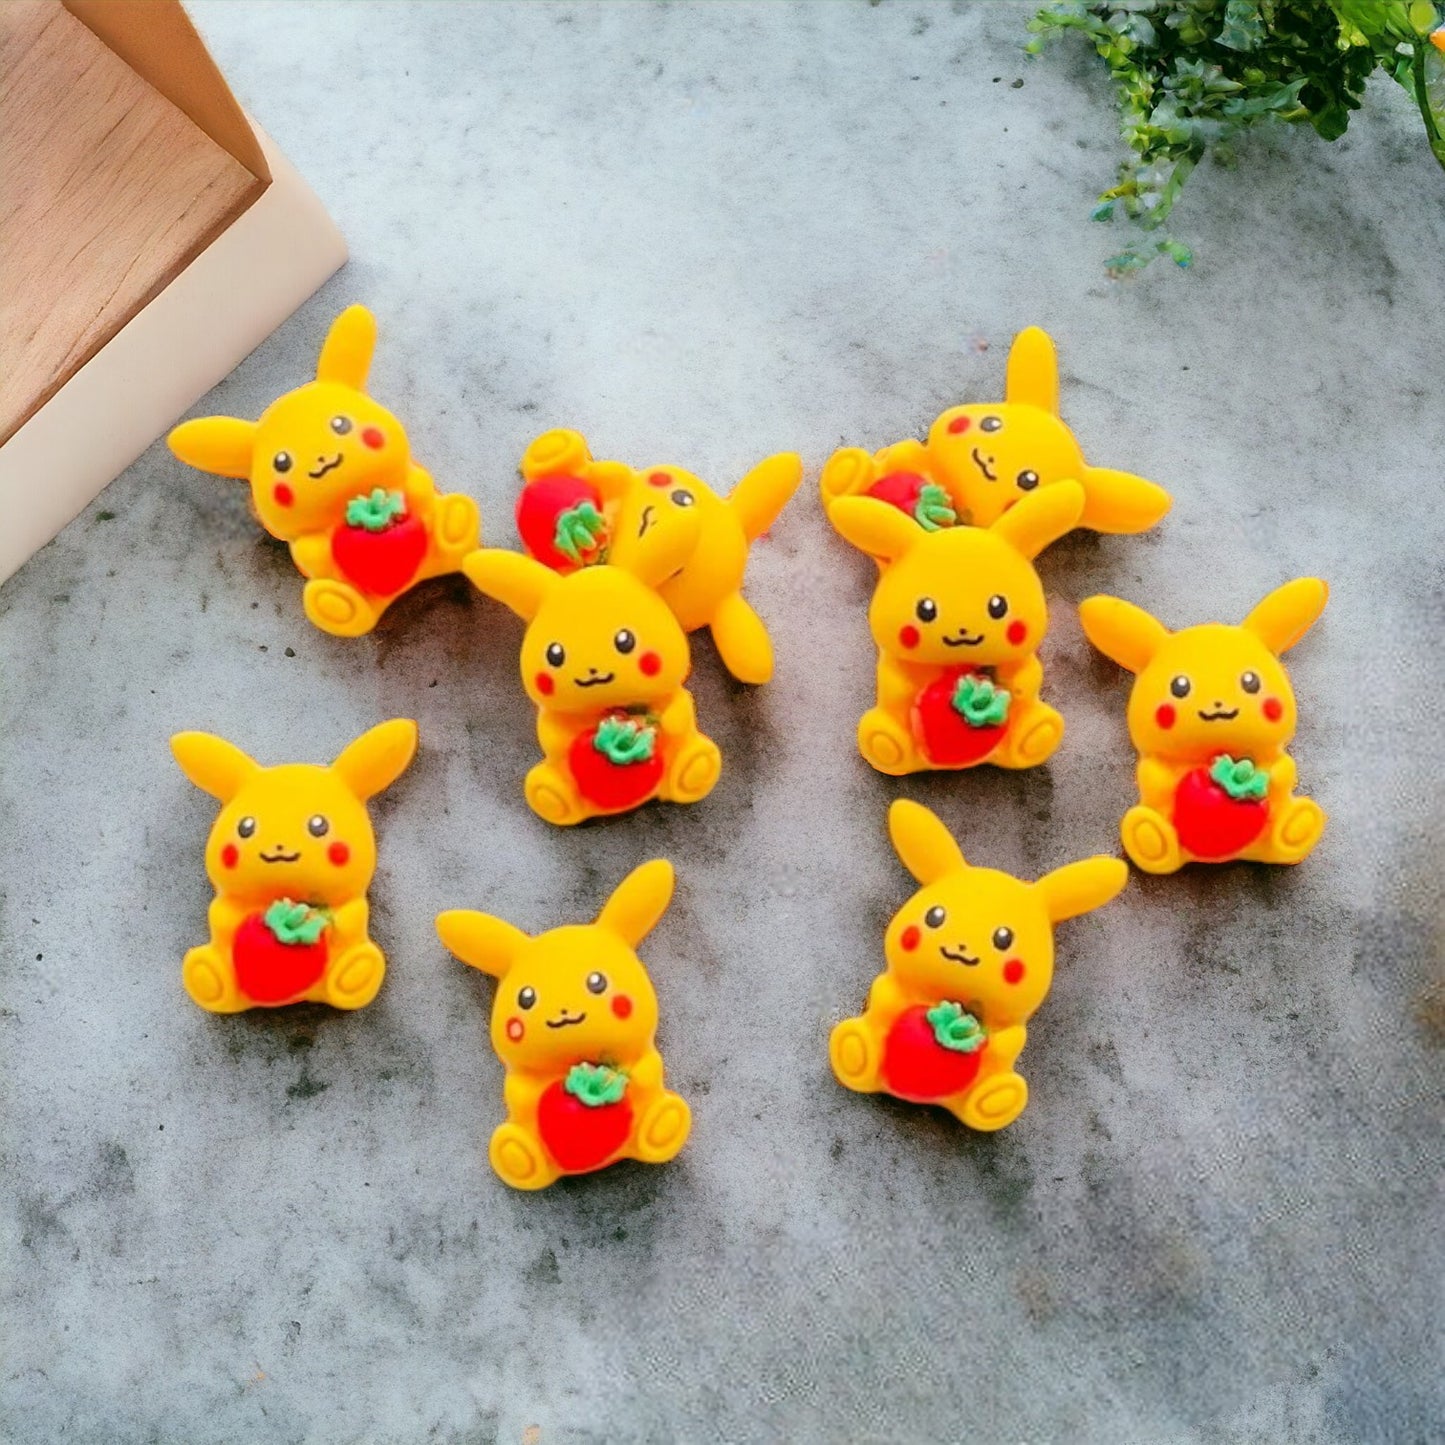 Mini - Pikachu en Résine Pokémon